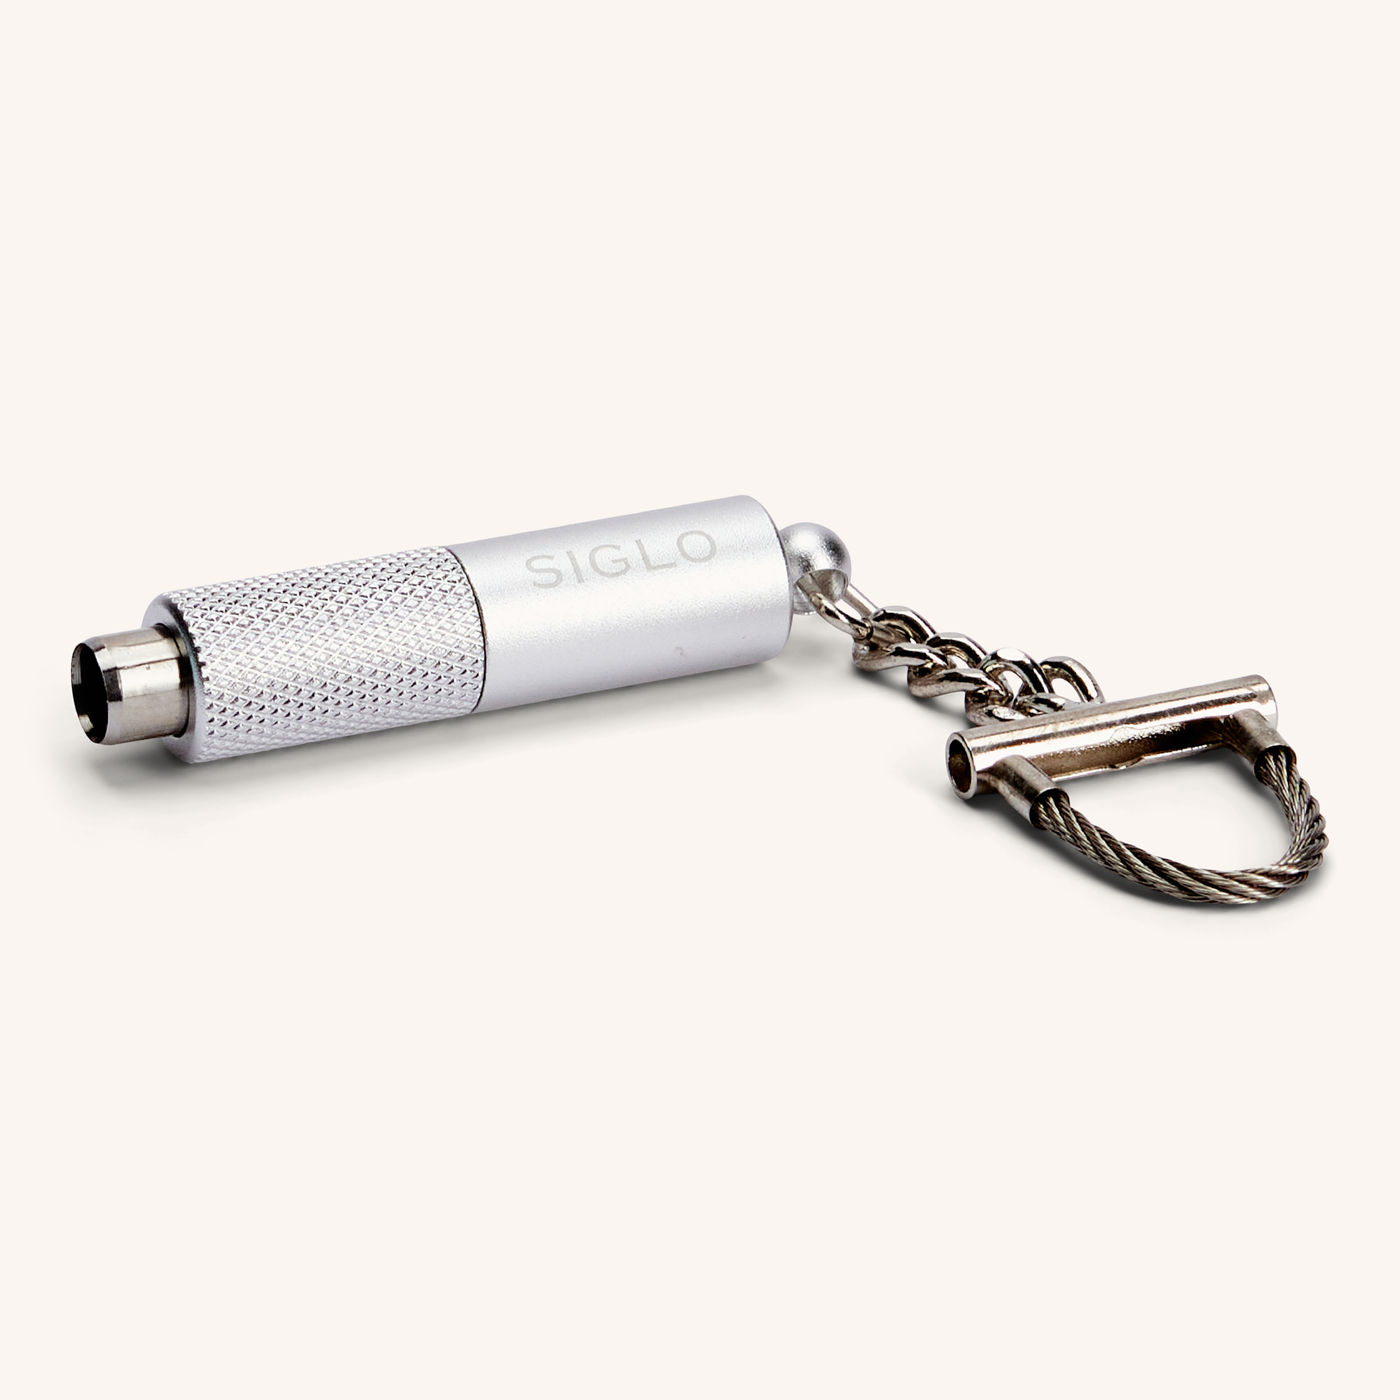 Siglo Keychain Punch Cutter Silver